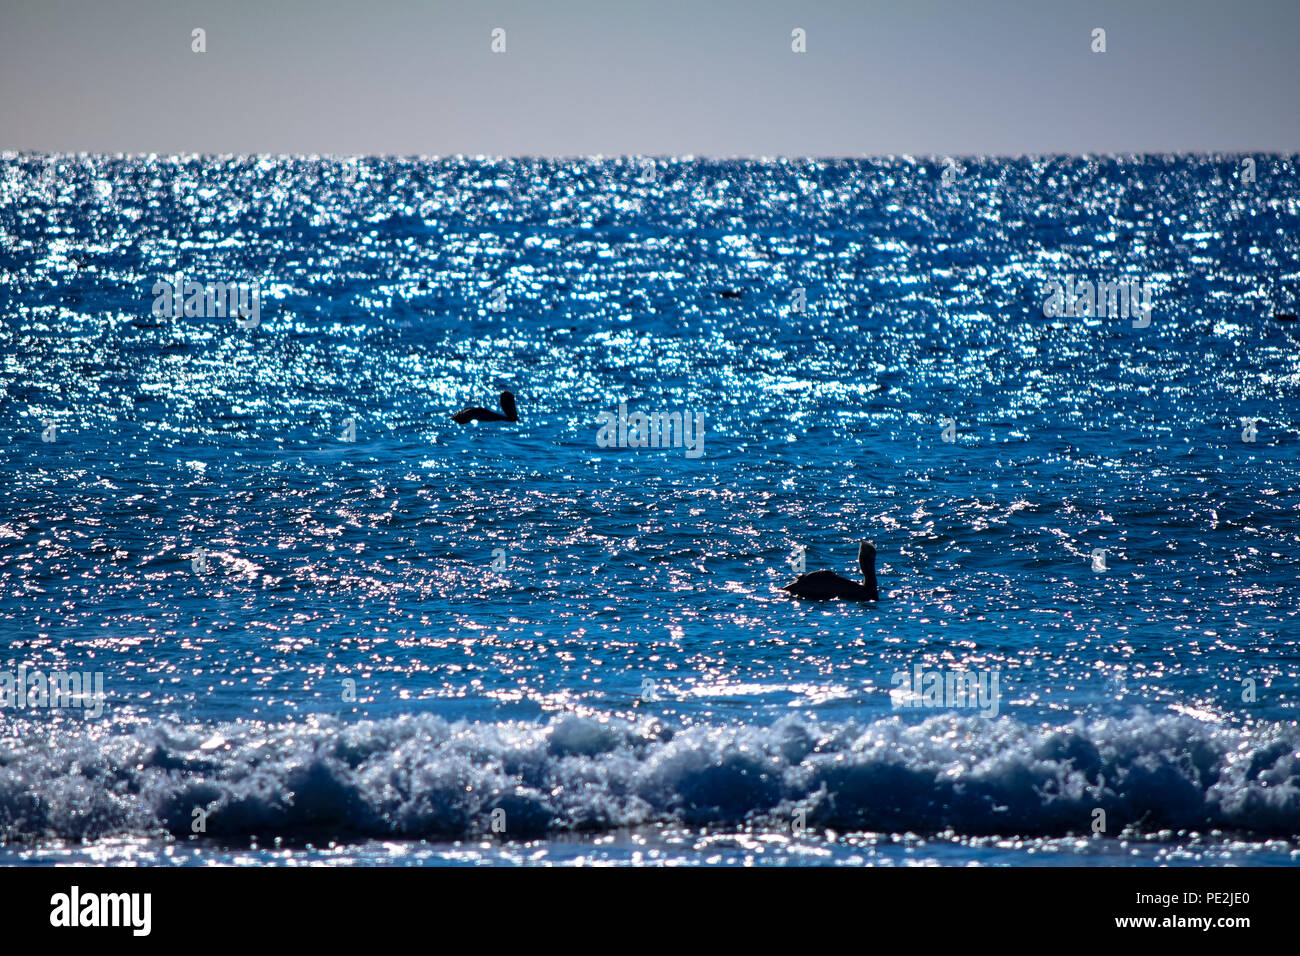 Pelicans enjoying the sun and surf of Malibu, California Stock Photo